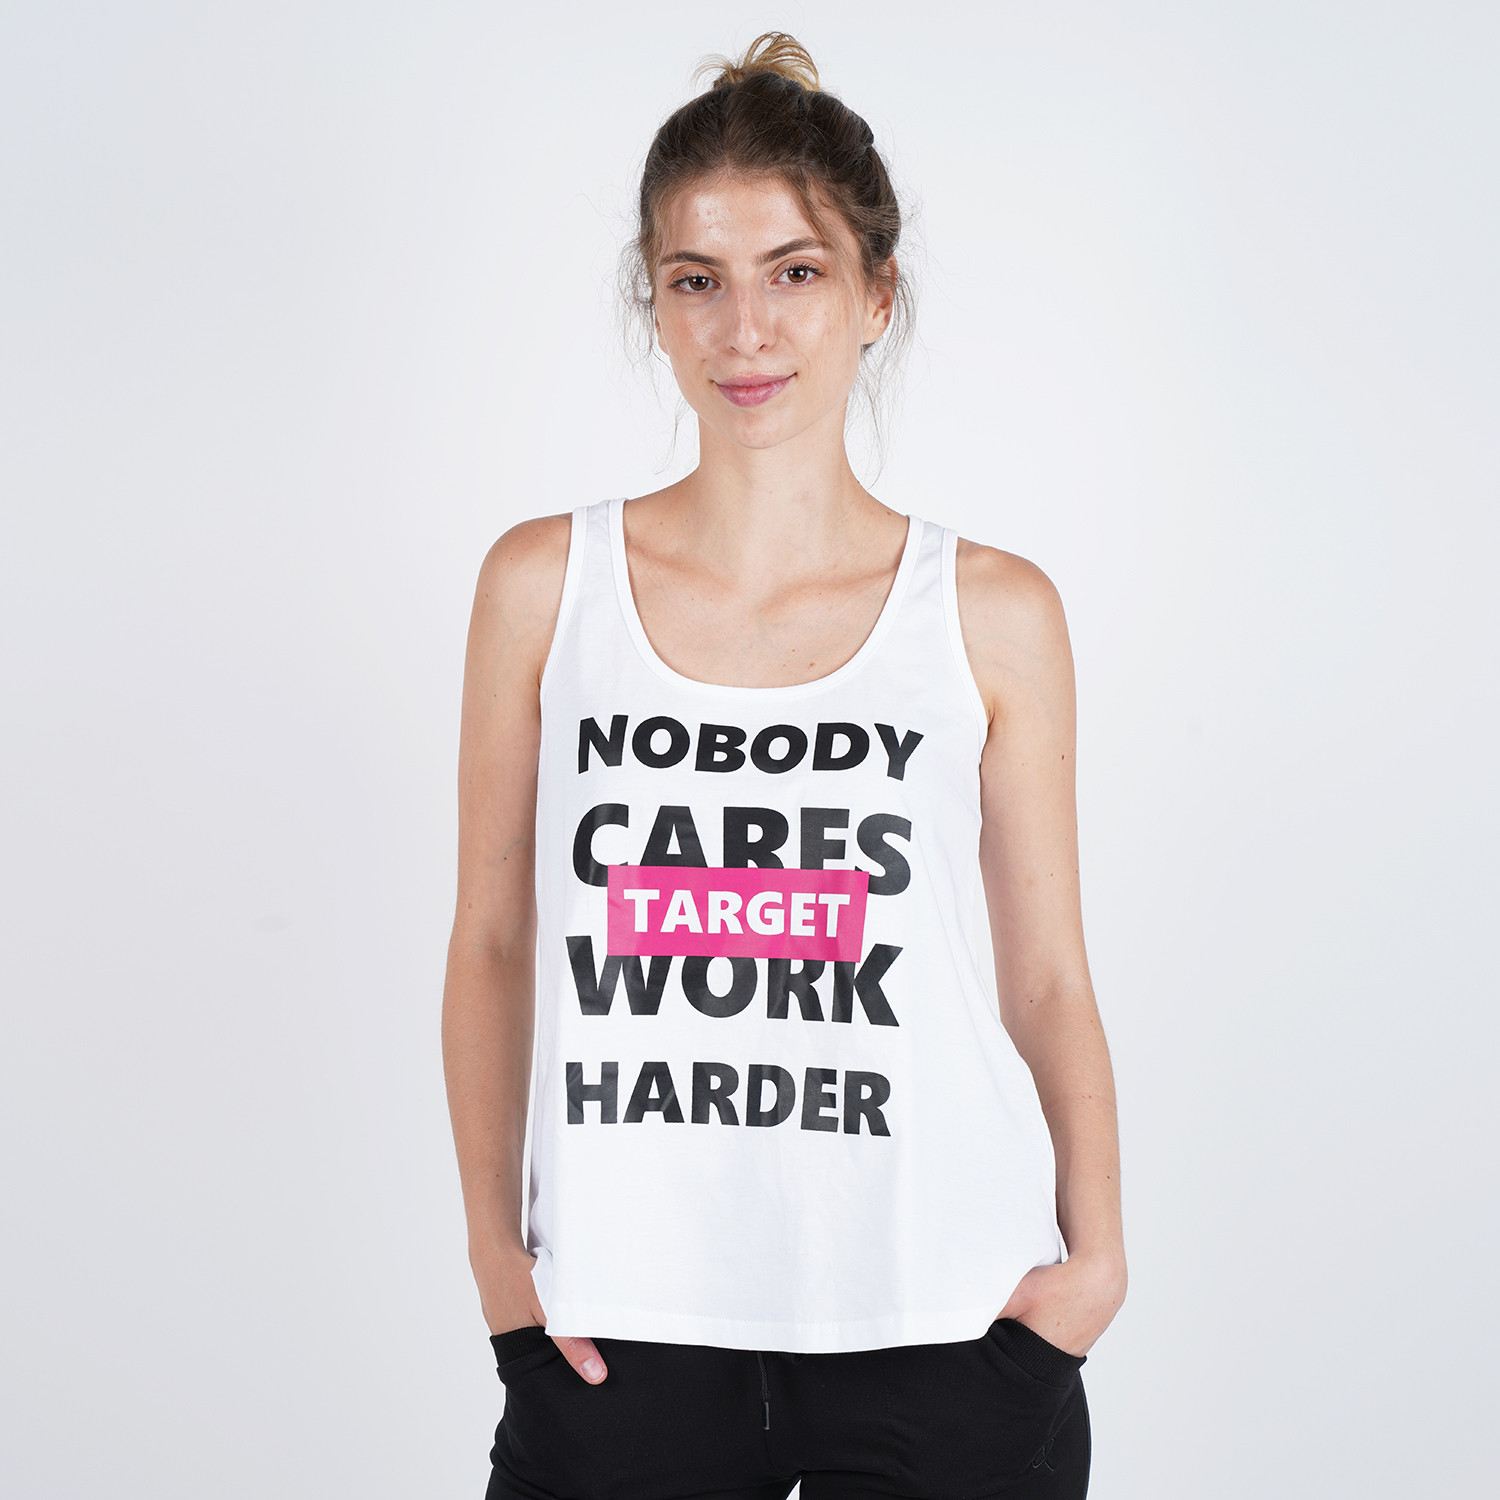 Target 'Work Harder' Γυναικεία Αμάνικη Μπλούζα (9000053643_3198)